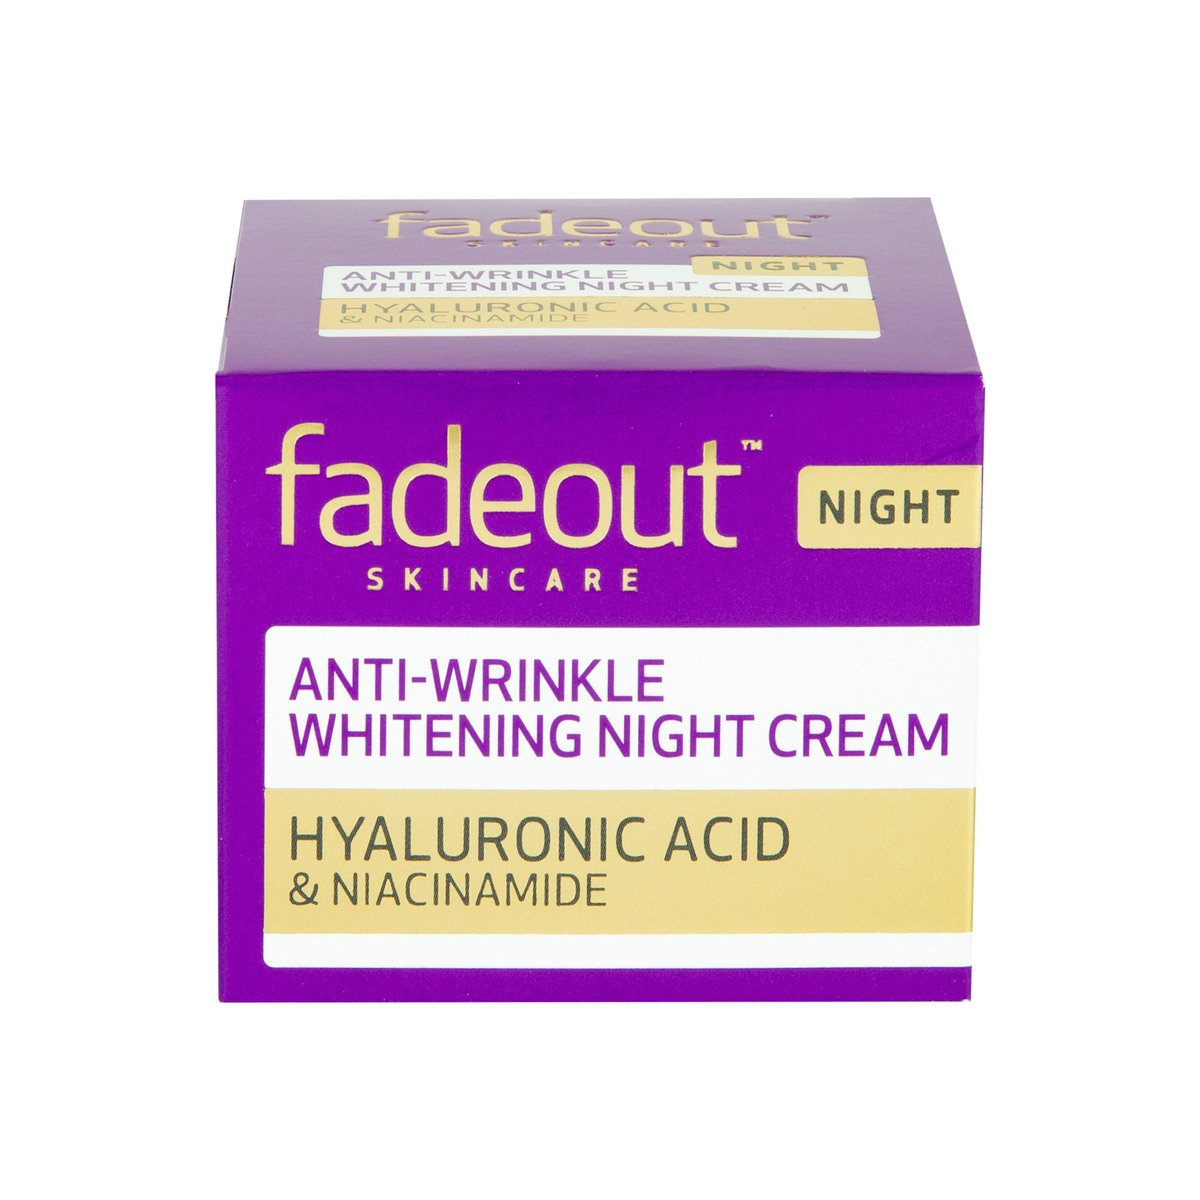 Fade Out Anti-Wrinkle Whitening Night Cream, 50 ml